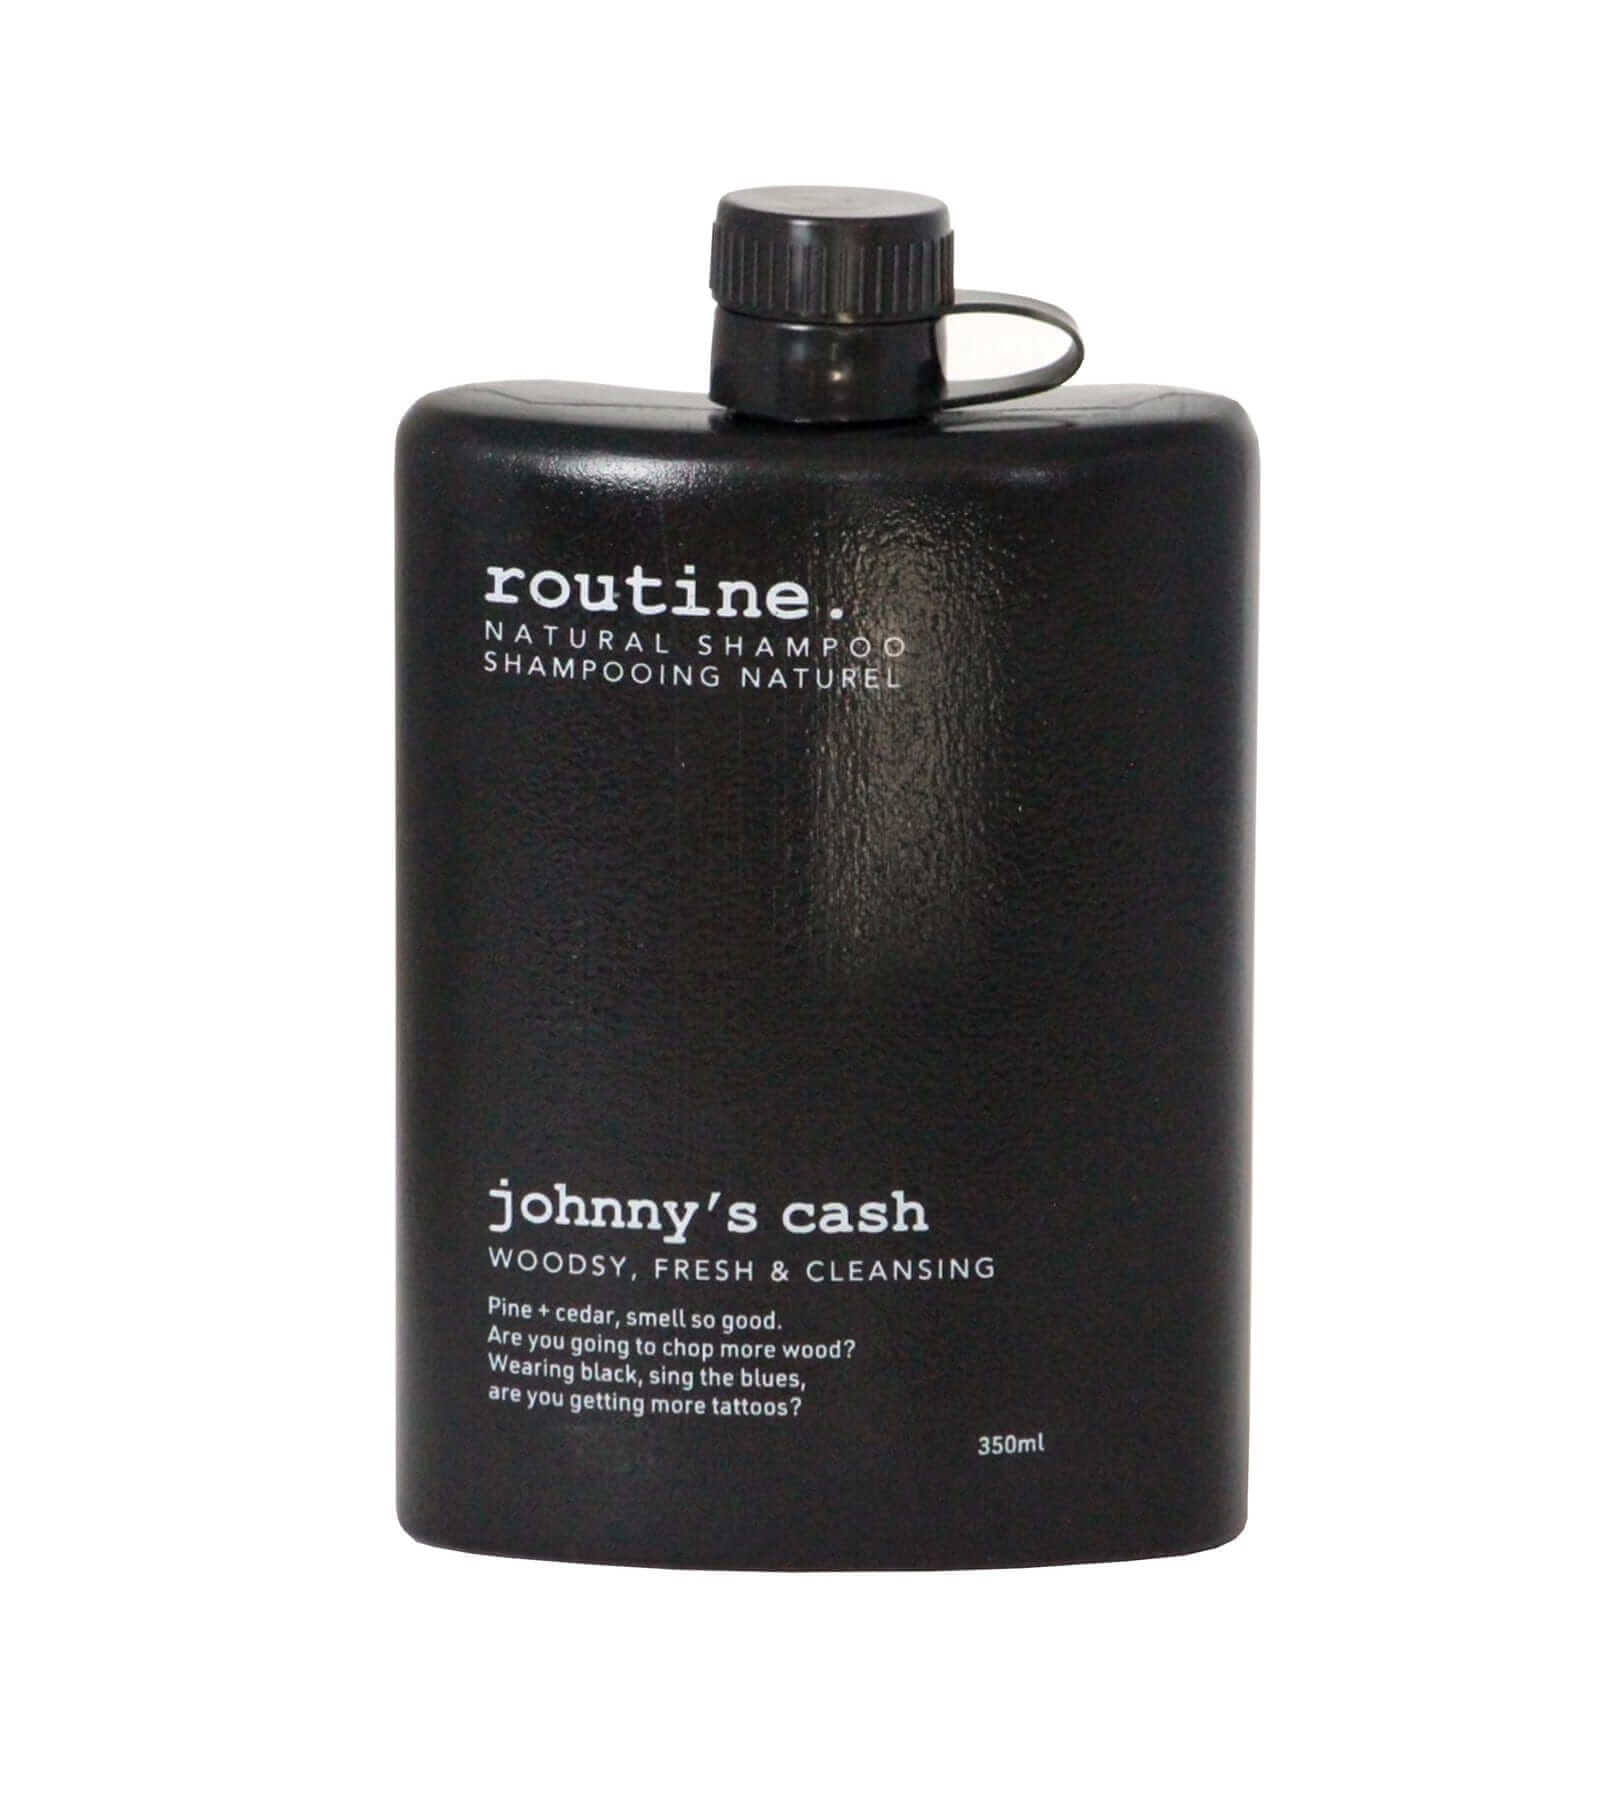 Routine Shampoo Routine, Natural Shampoo, Johnny's Cash, made in Calgary